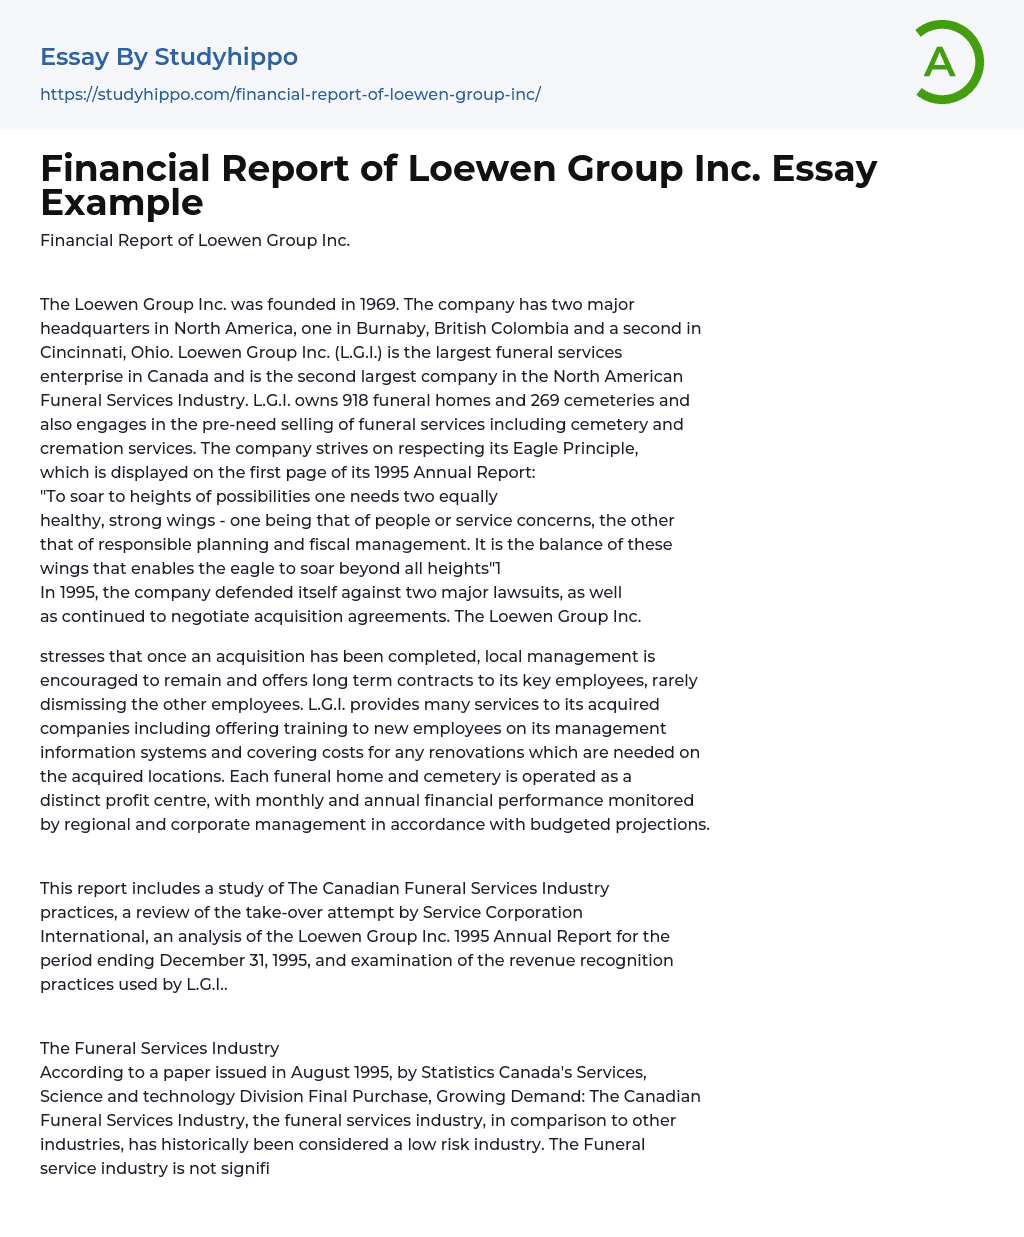 Financial Report of Loewen Group Inc. Essay Example